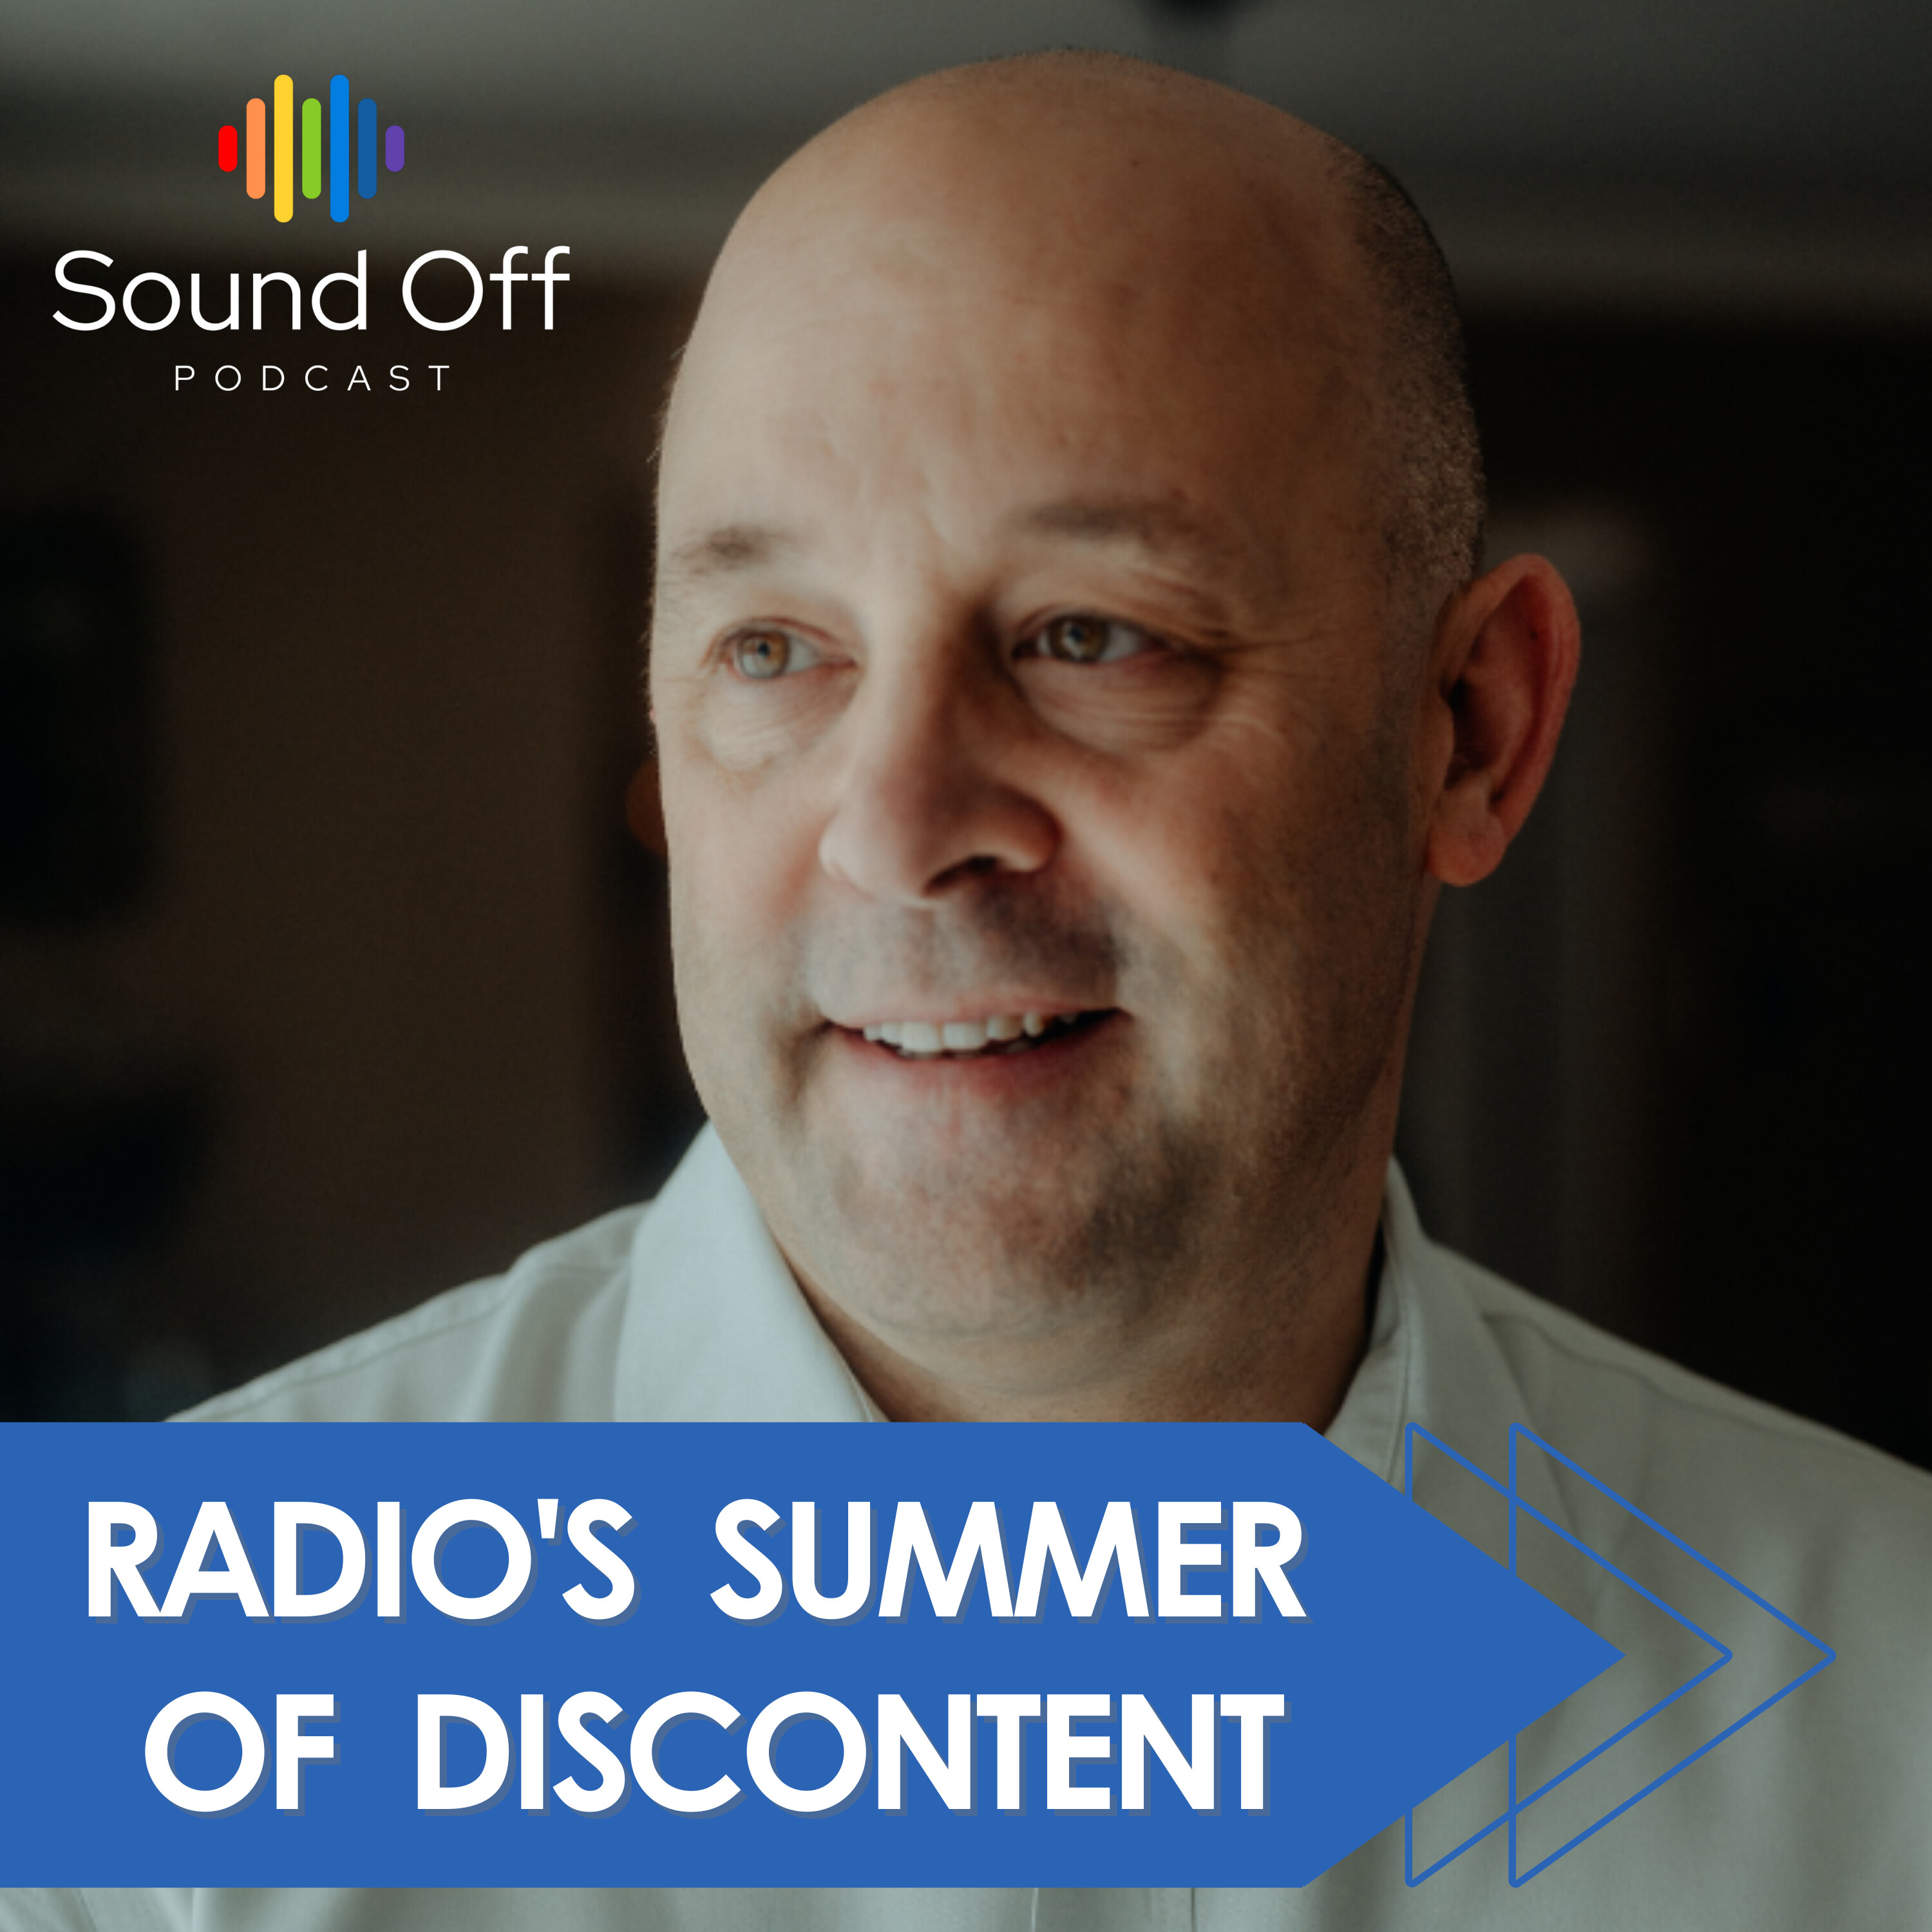 Radio's Summer of Discontent